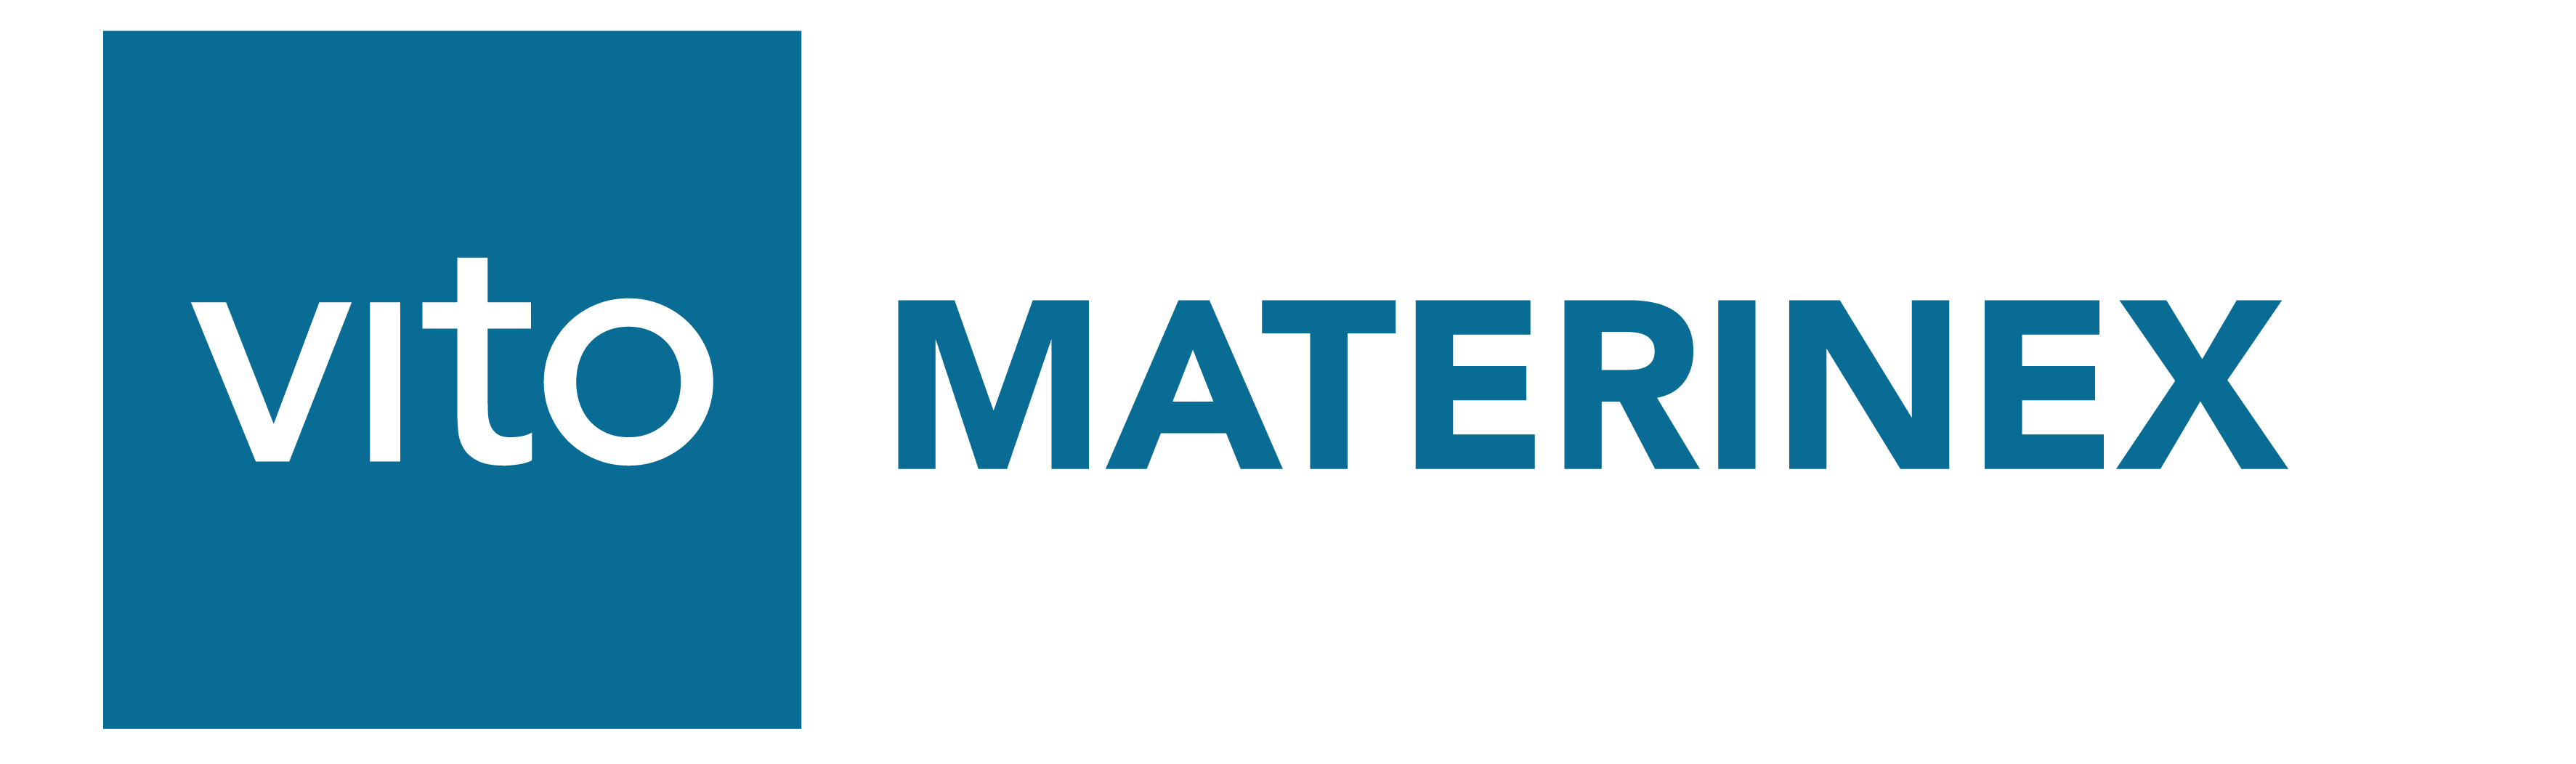 MateriNex logo